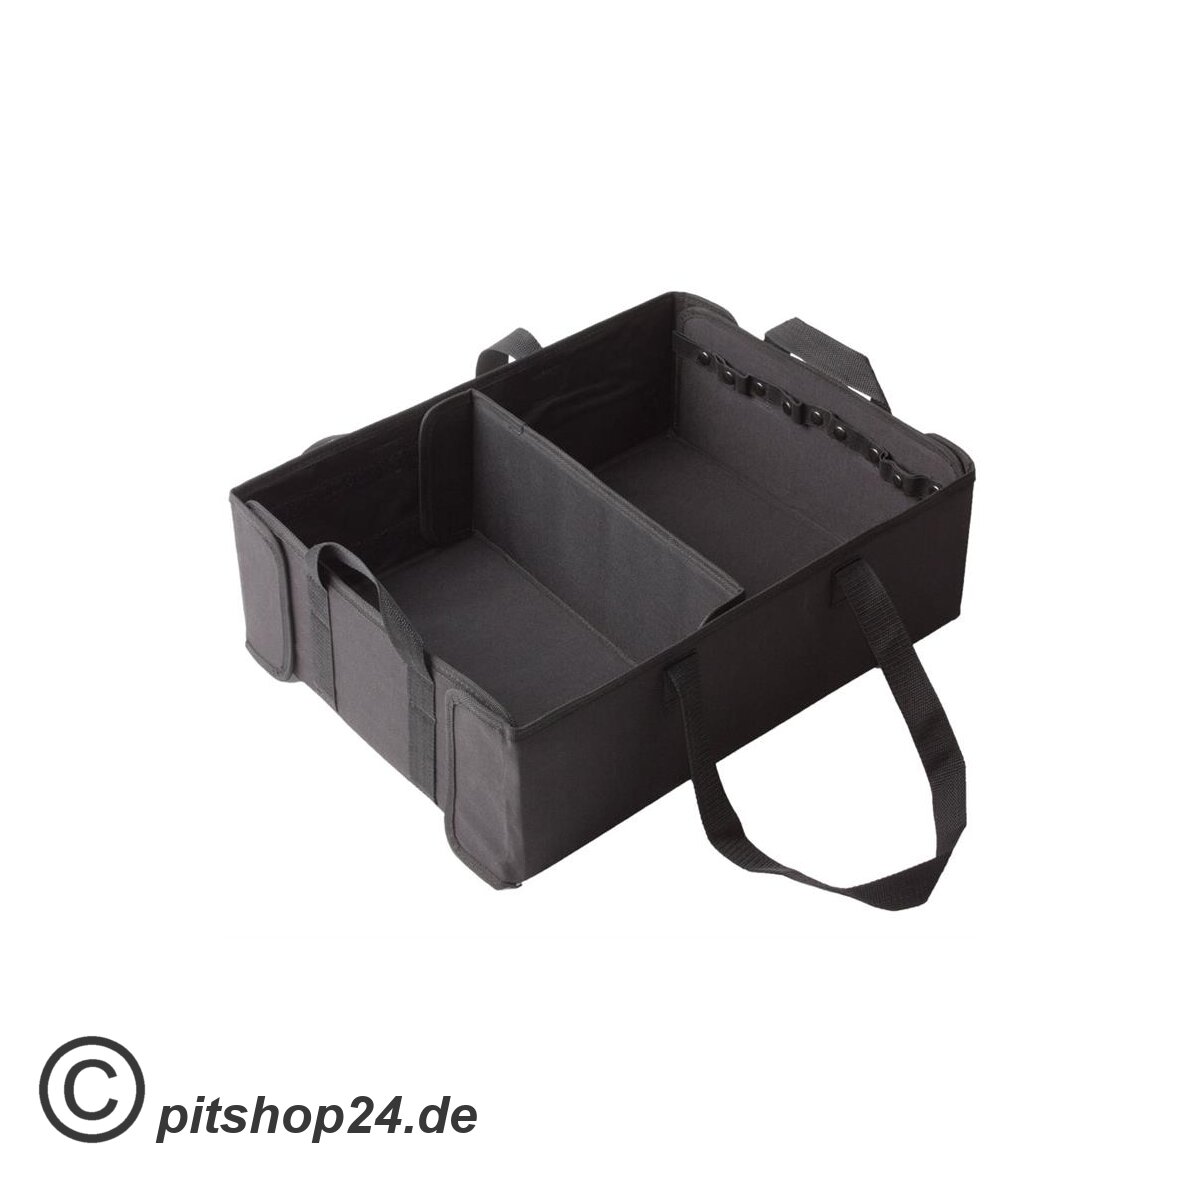 https://pitshop24.de/media/image/product/401/lg/kofferraumtasche-car-bag-644.jpg